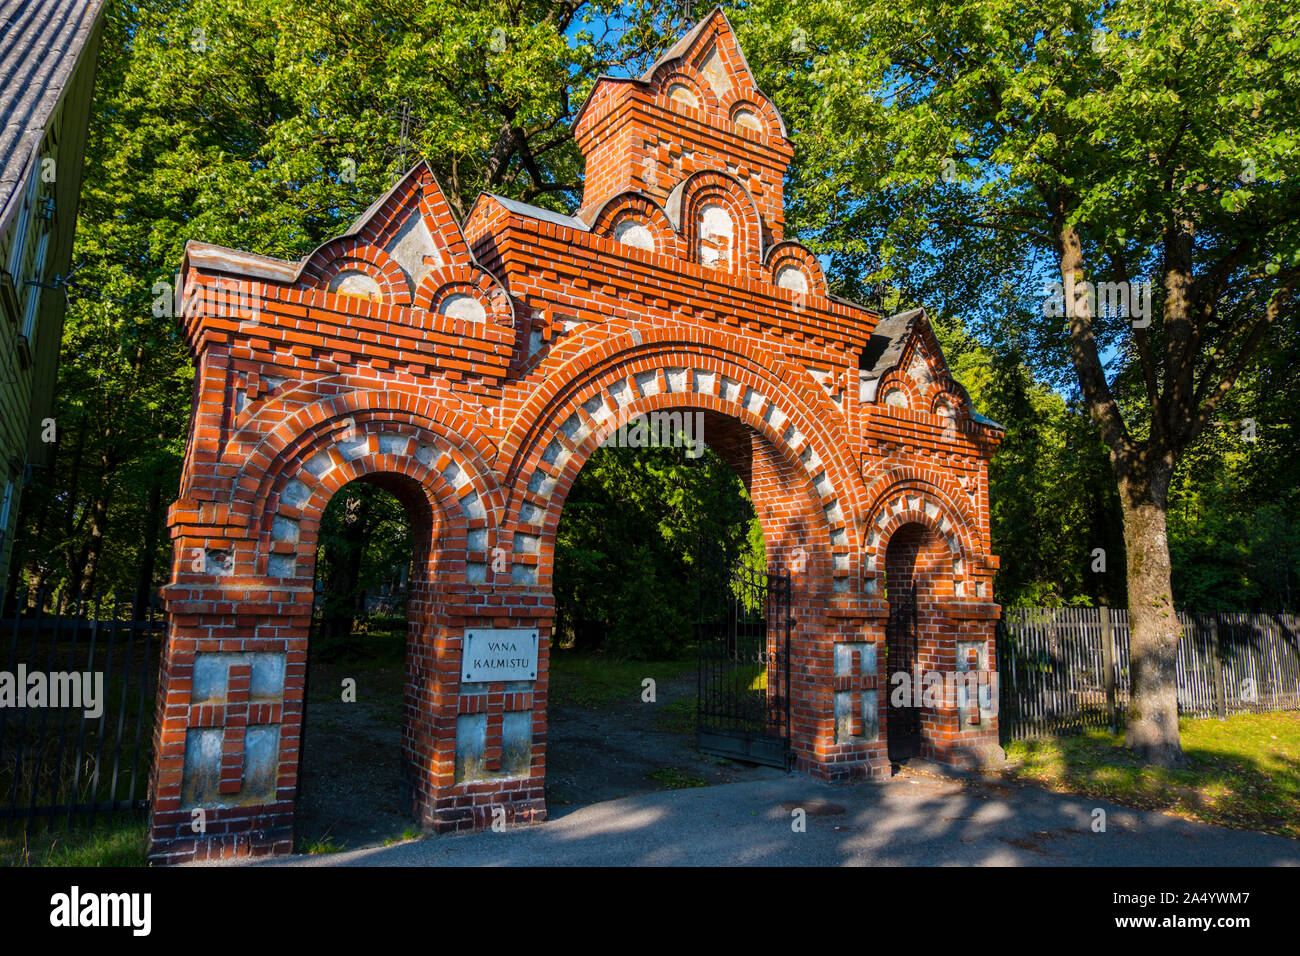 Gate, Vana kalmistu, old cemetary, Pärnu, Estonia Stock Photo - Alamy